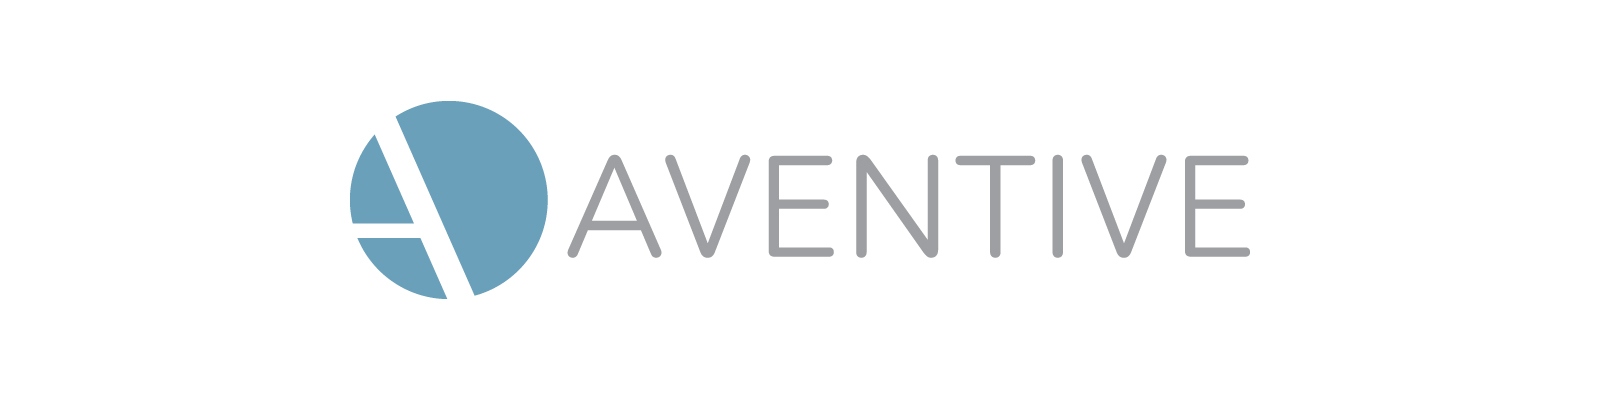 Aventive, Inc. brand identity & website - Cleveland Design